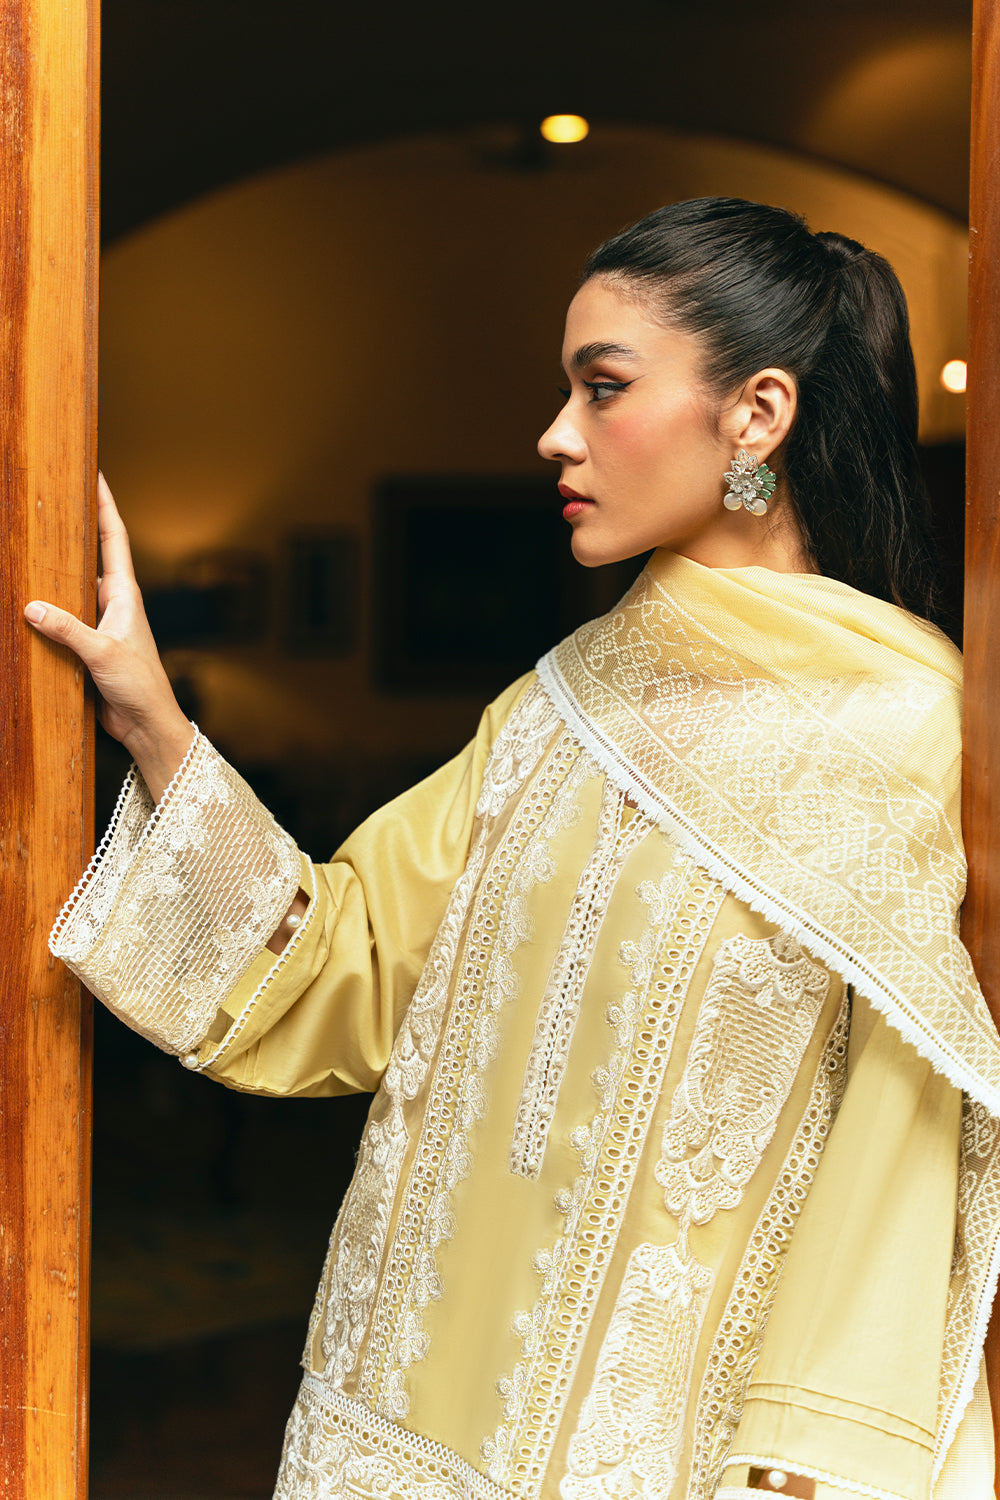 Buy Now, Joelene - Eyana Eid Pret 2023 - Saira Rizwan - Shahana Collection UK - Wedding and Bridal Party Dresses 